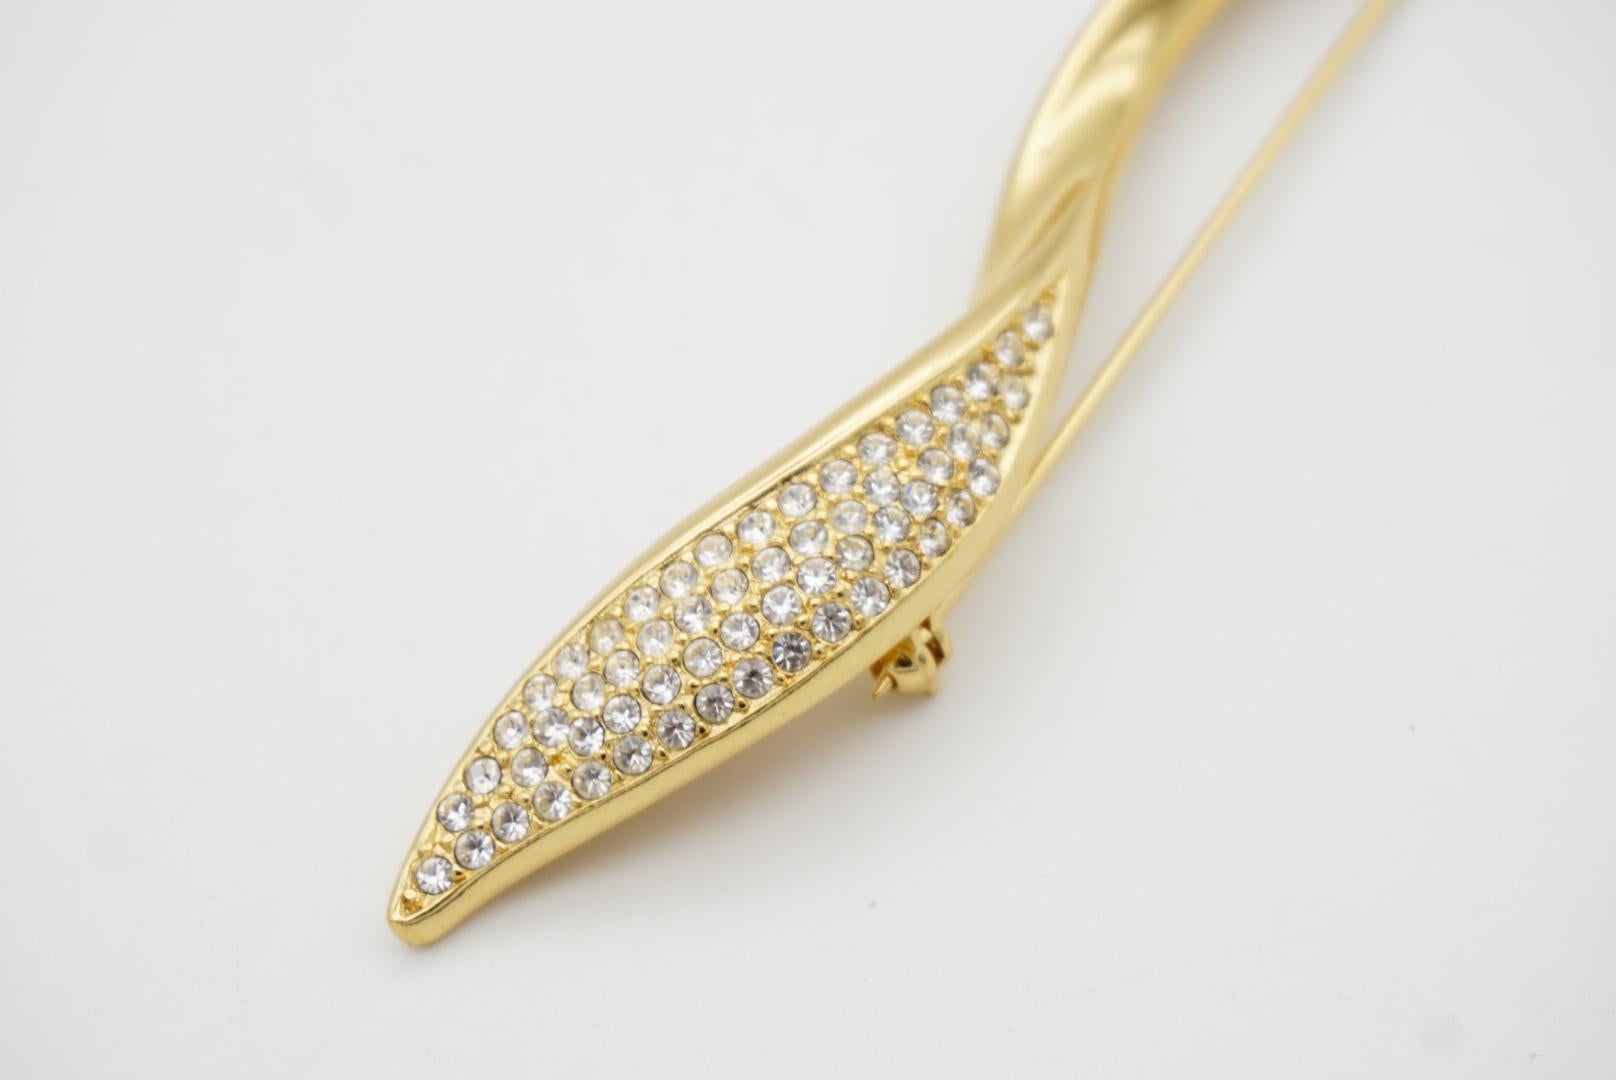 Christian Dior 1970s Vintage Large Long Swirl Leaf Flame Crystals Gold Brooch For Sale 4